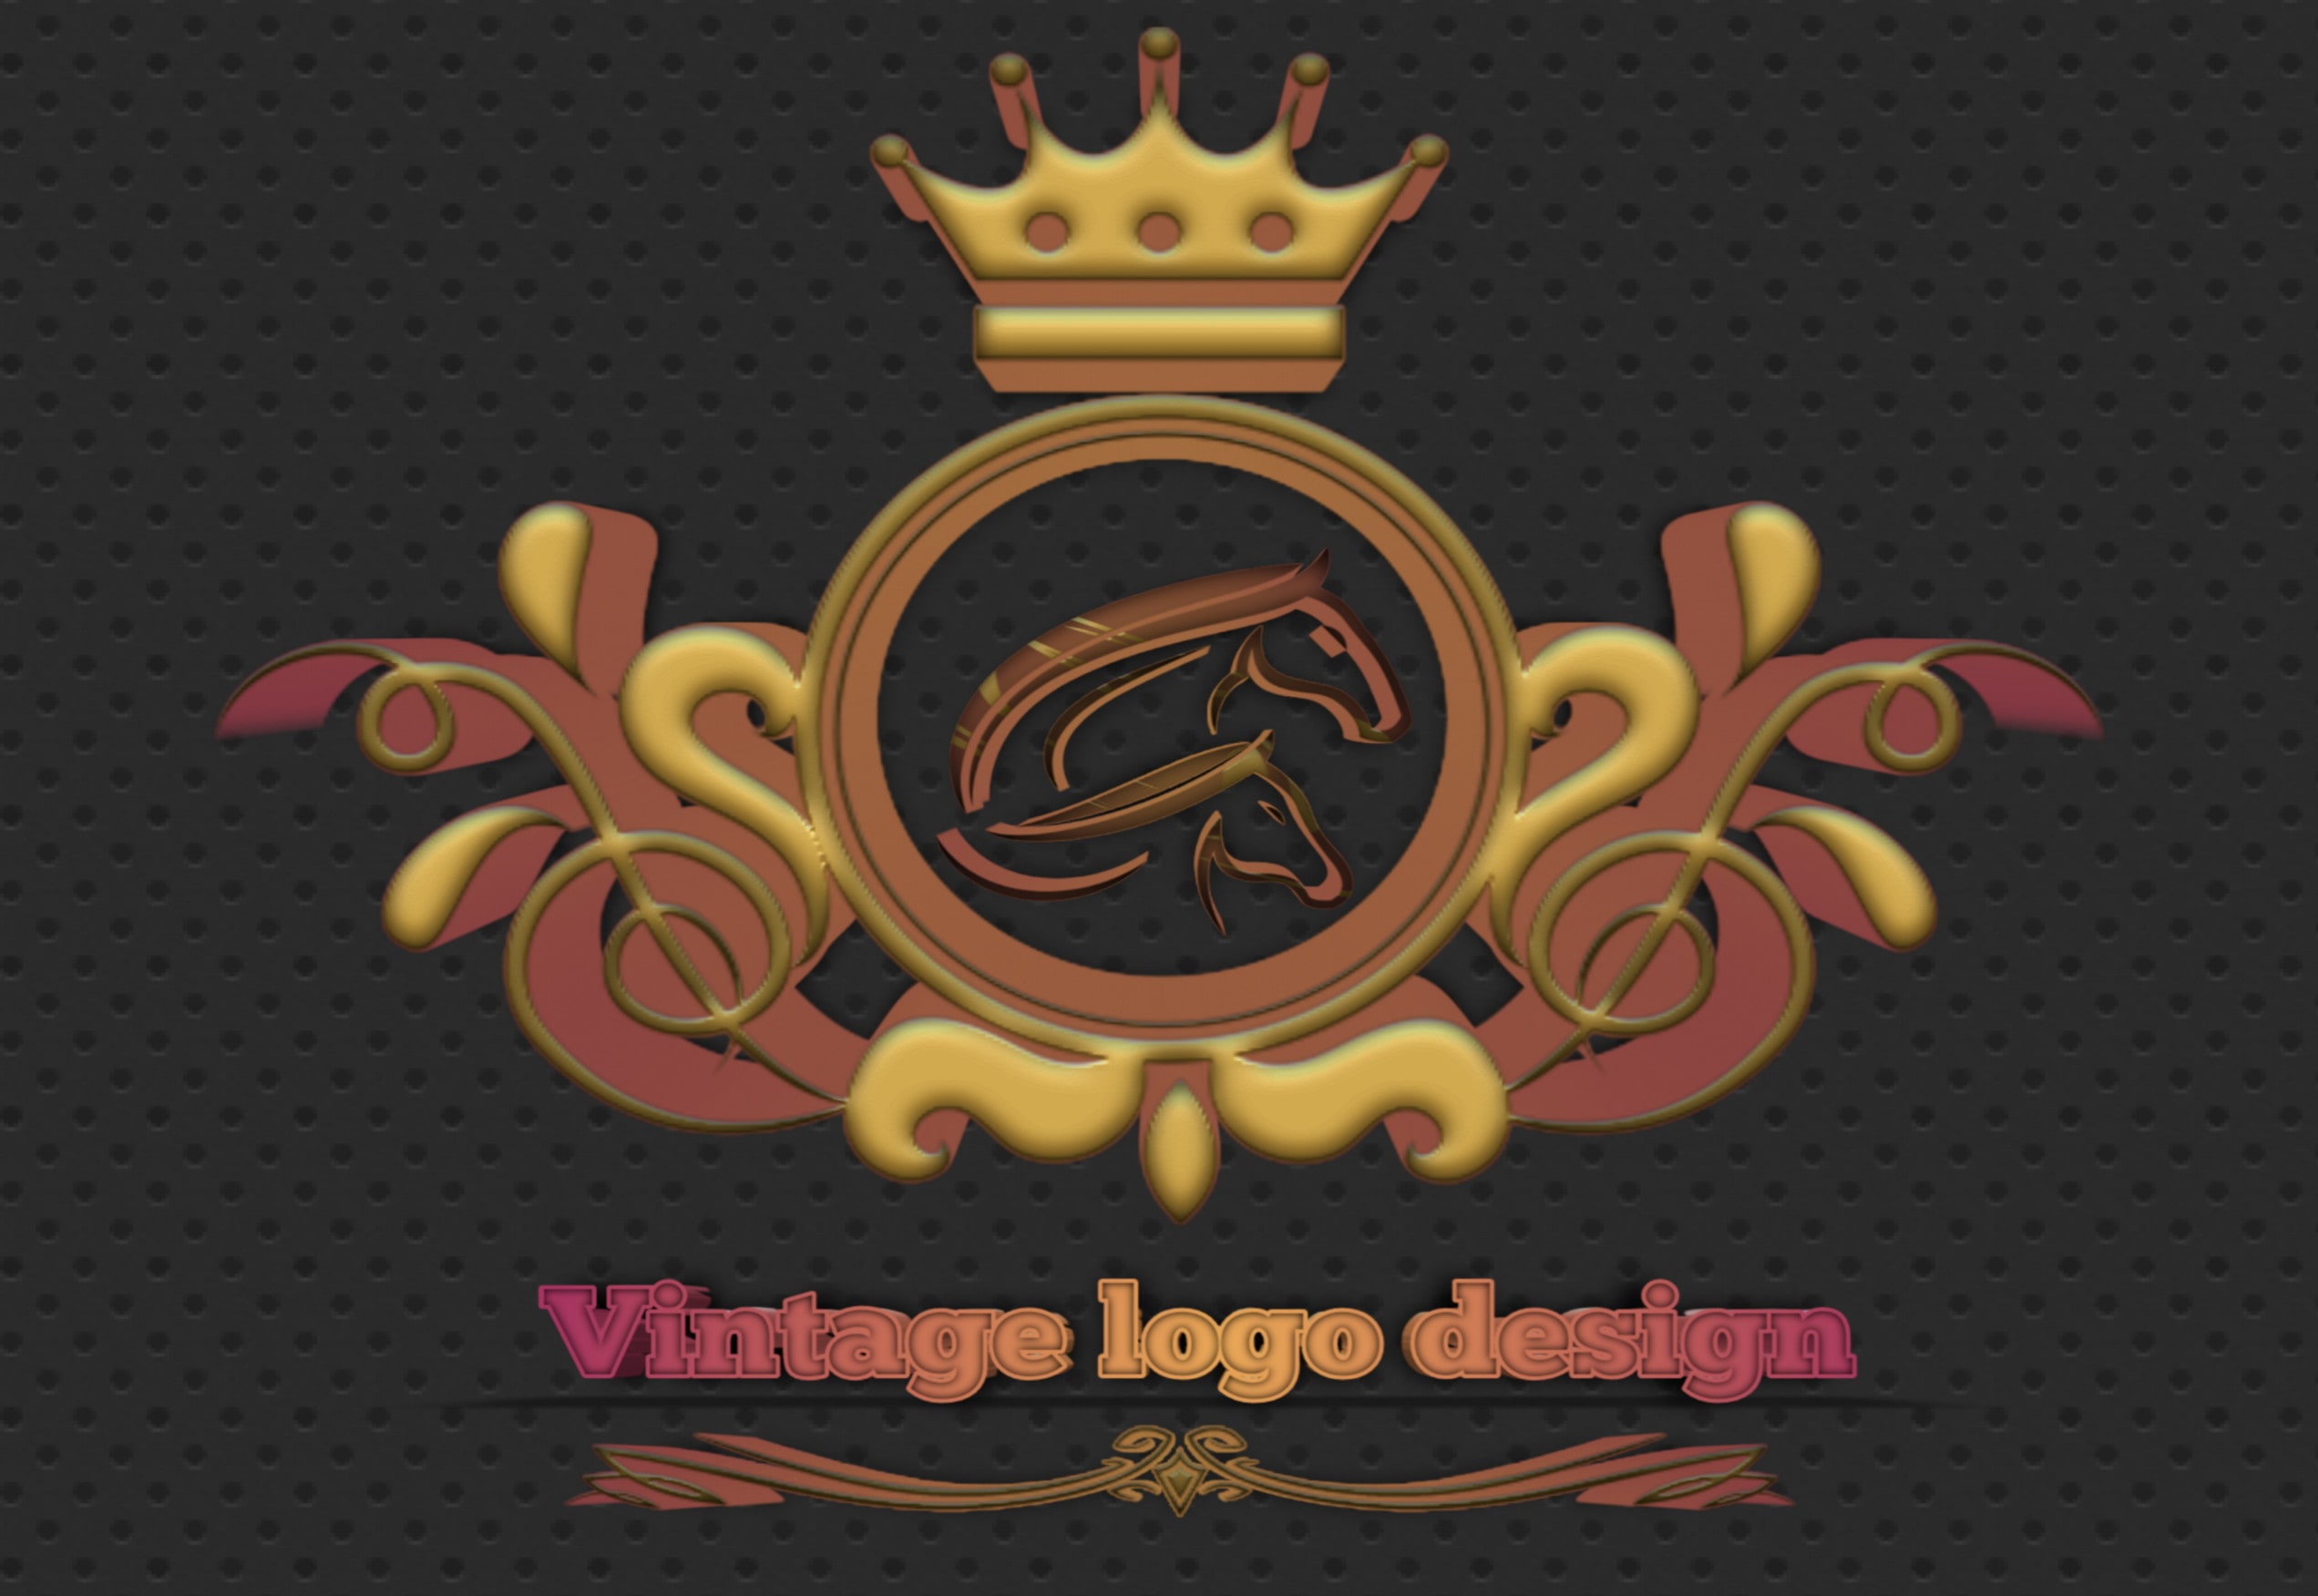 Make vintage logo design and animation by Babarazampakist | Fiverr